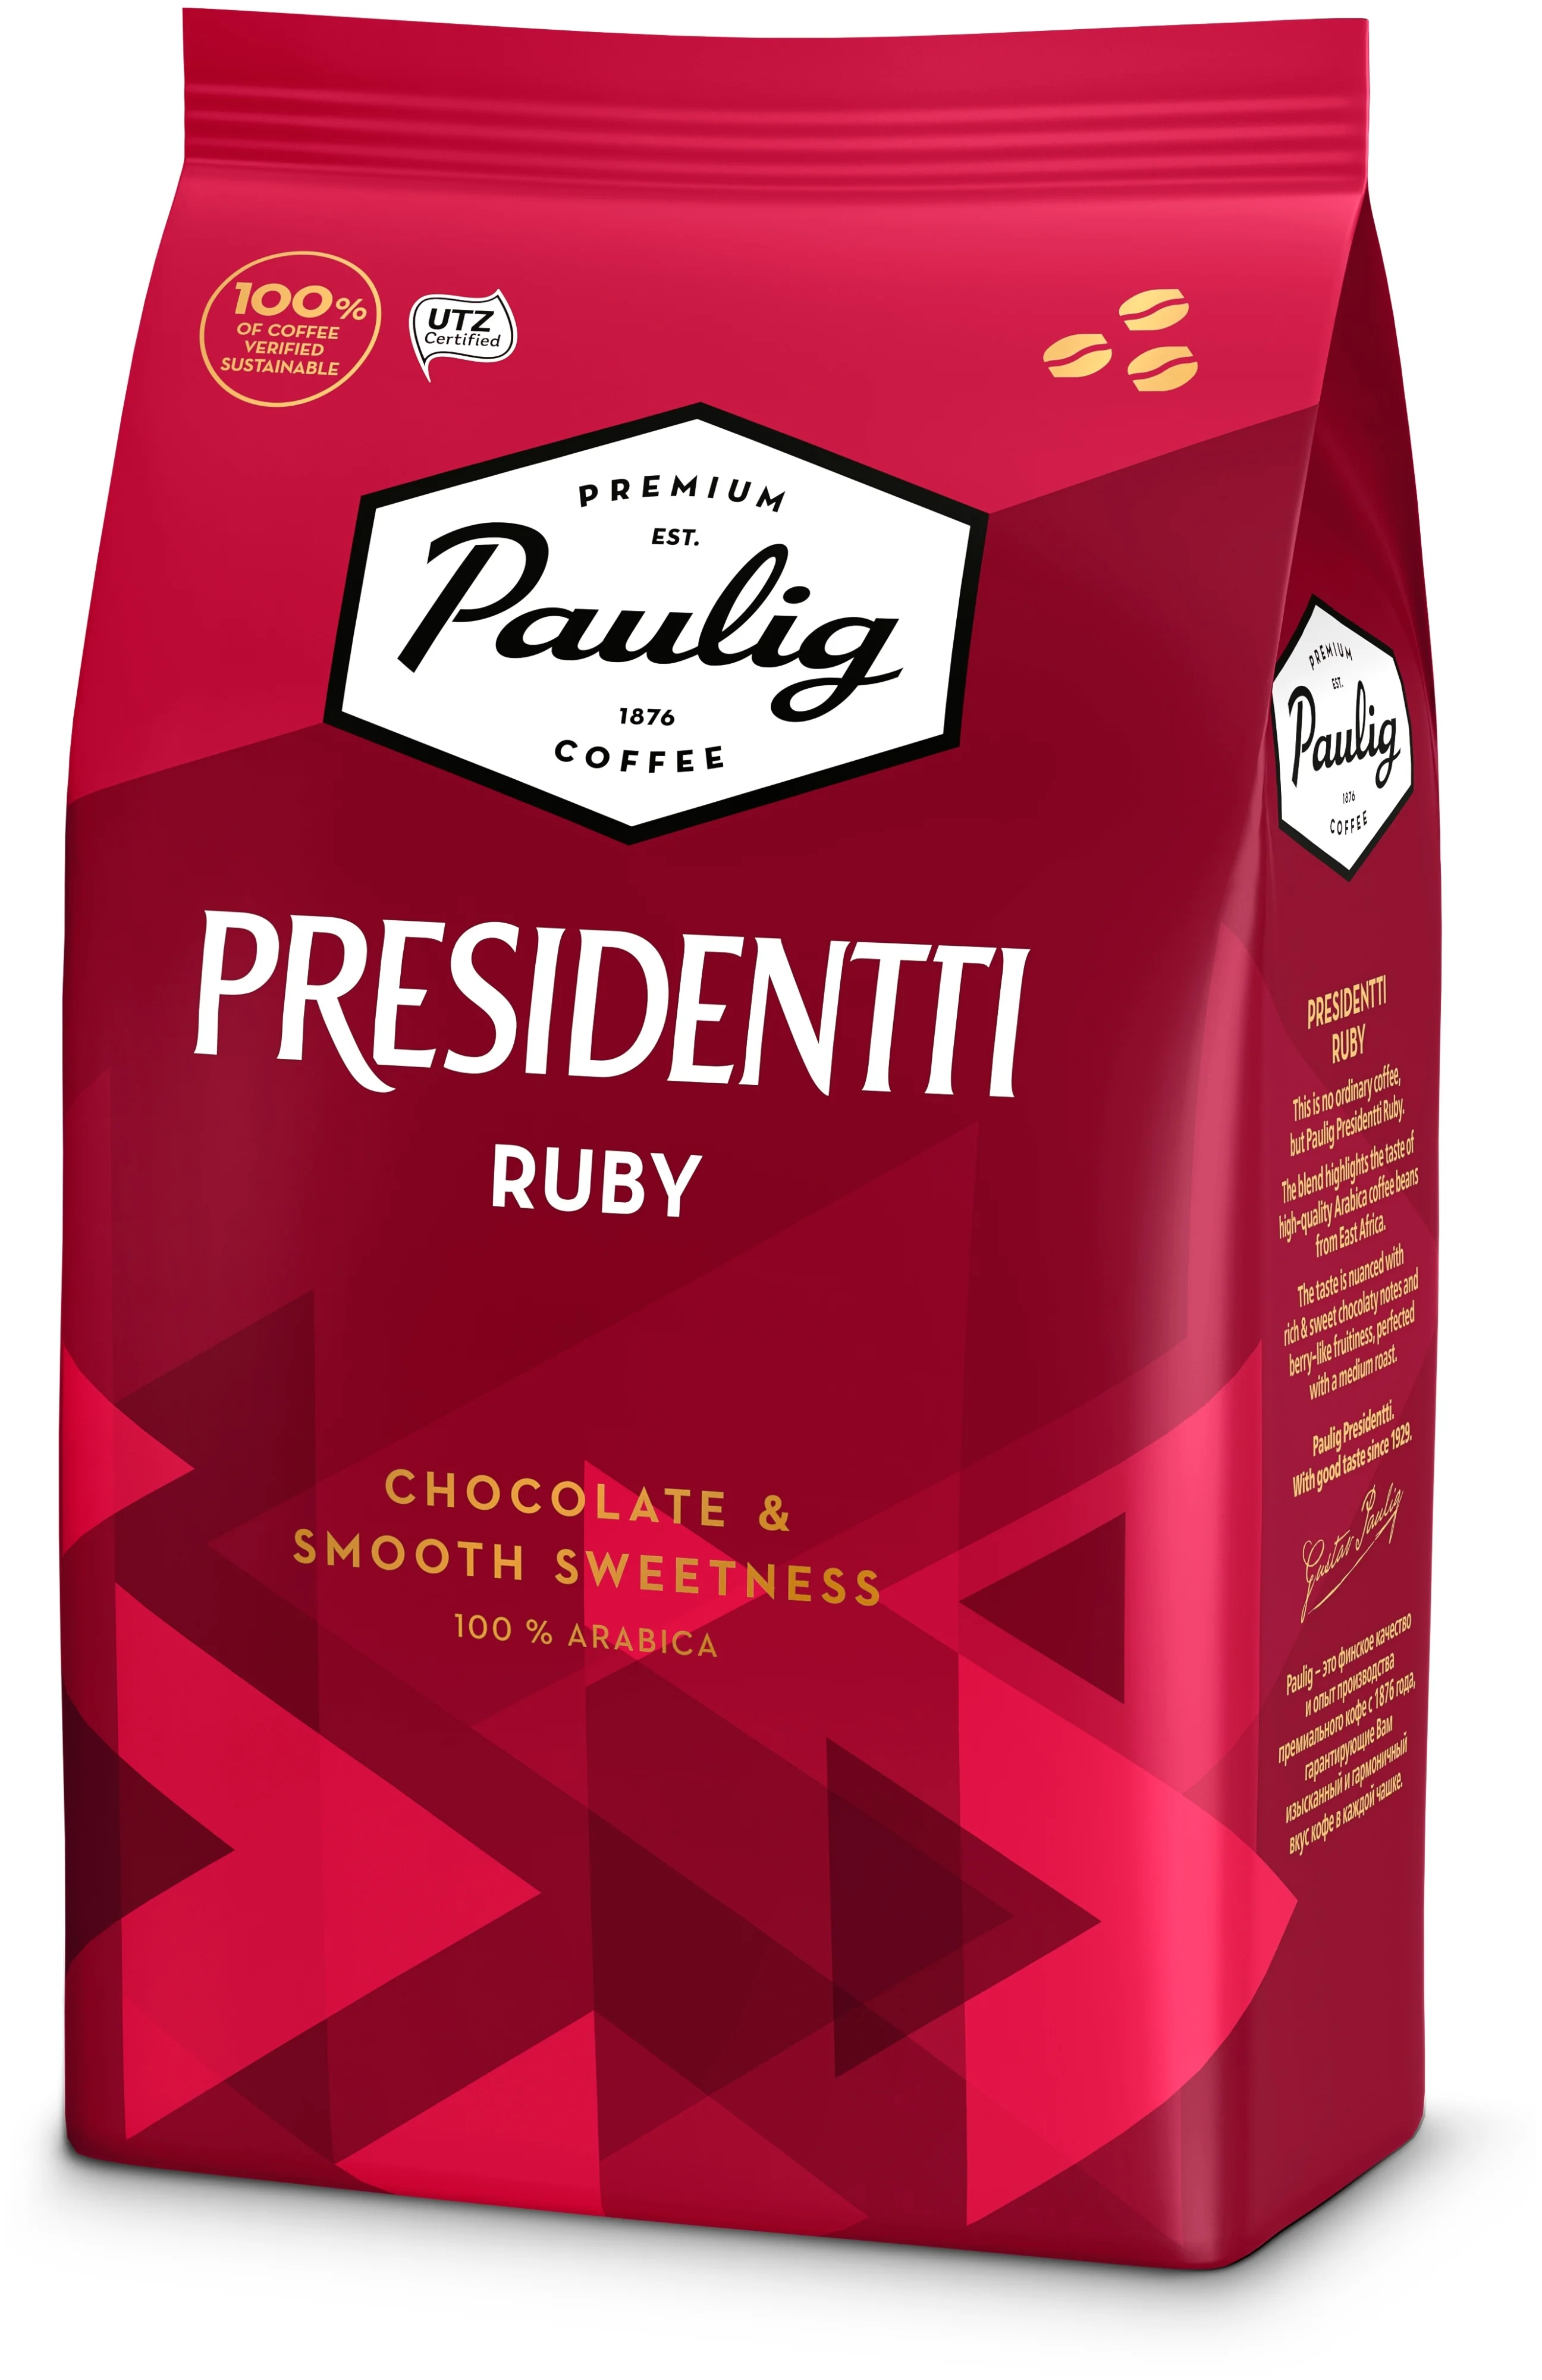 Paulig Presidentti Ruby - вид зерен: арабика